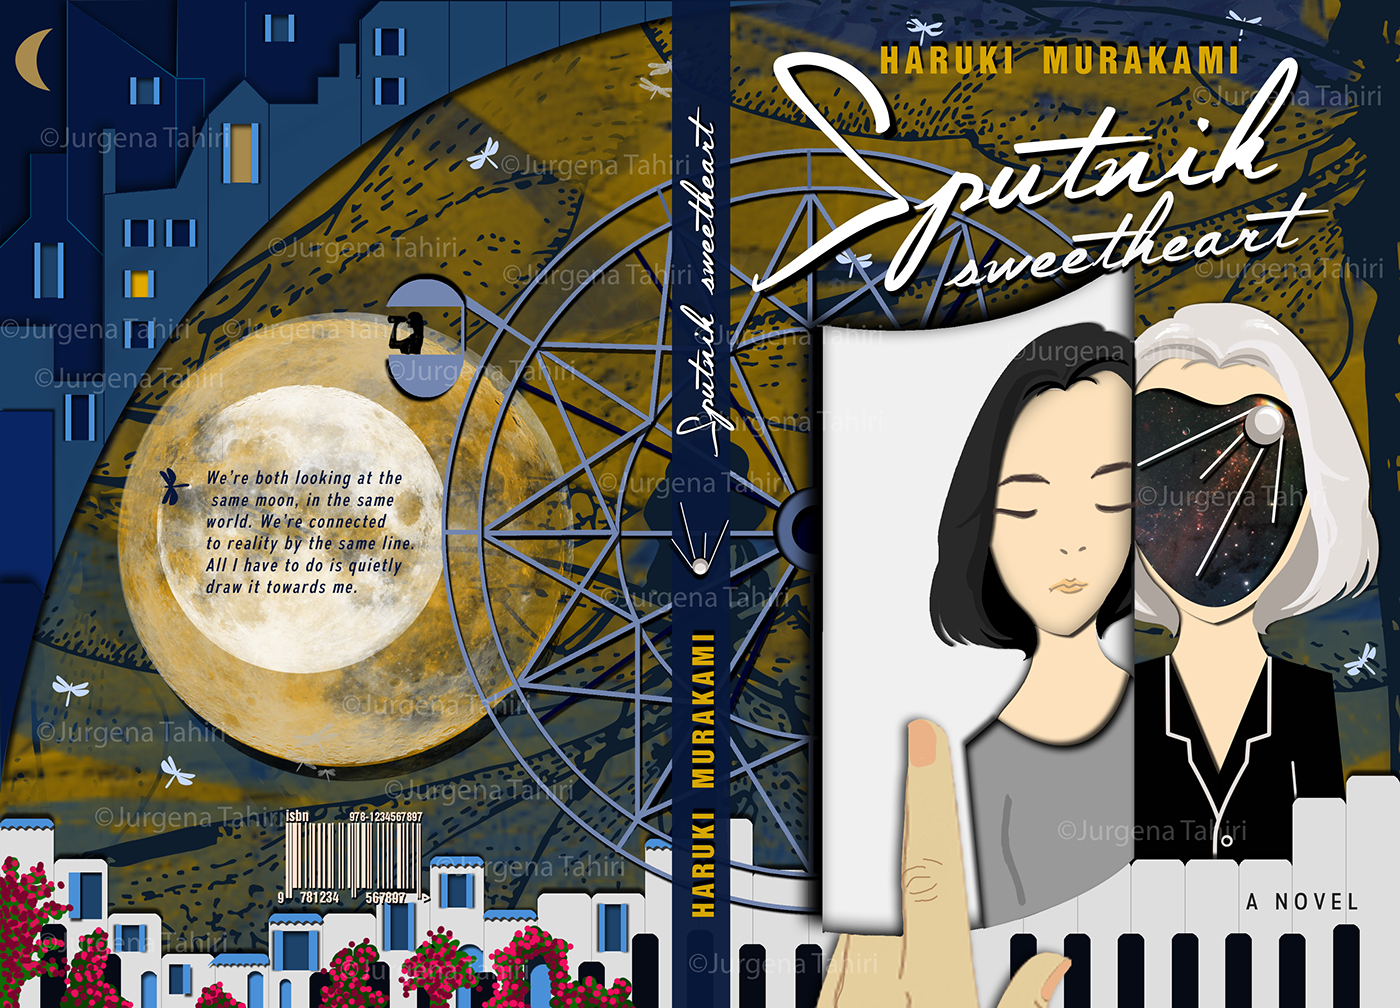 Haruki Murakami Murakami sputniksweetheart Sputnik bookcover cover coverconcept